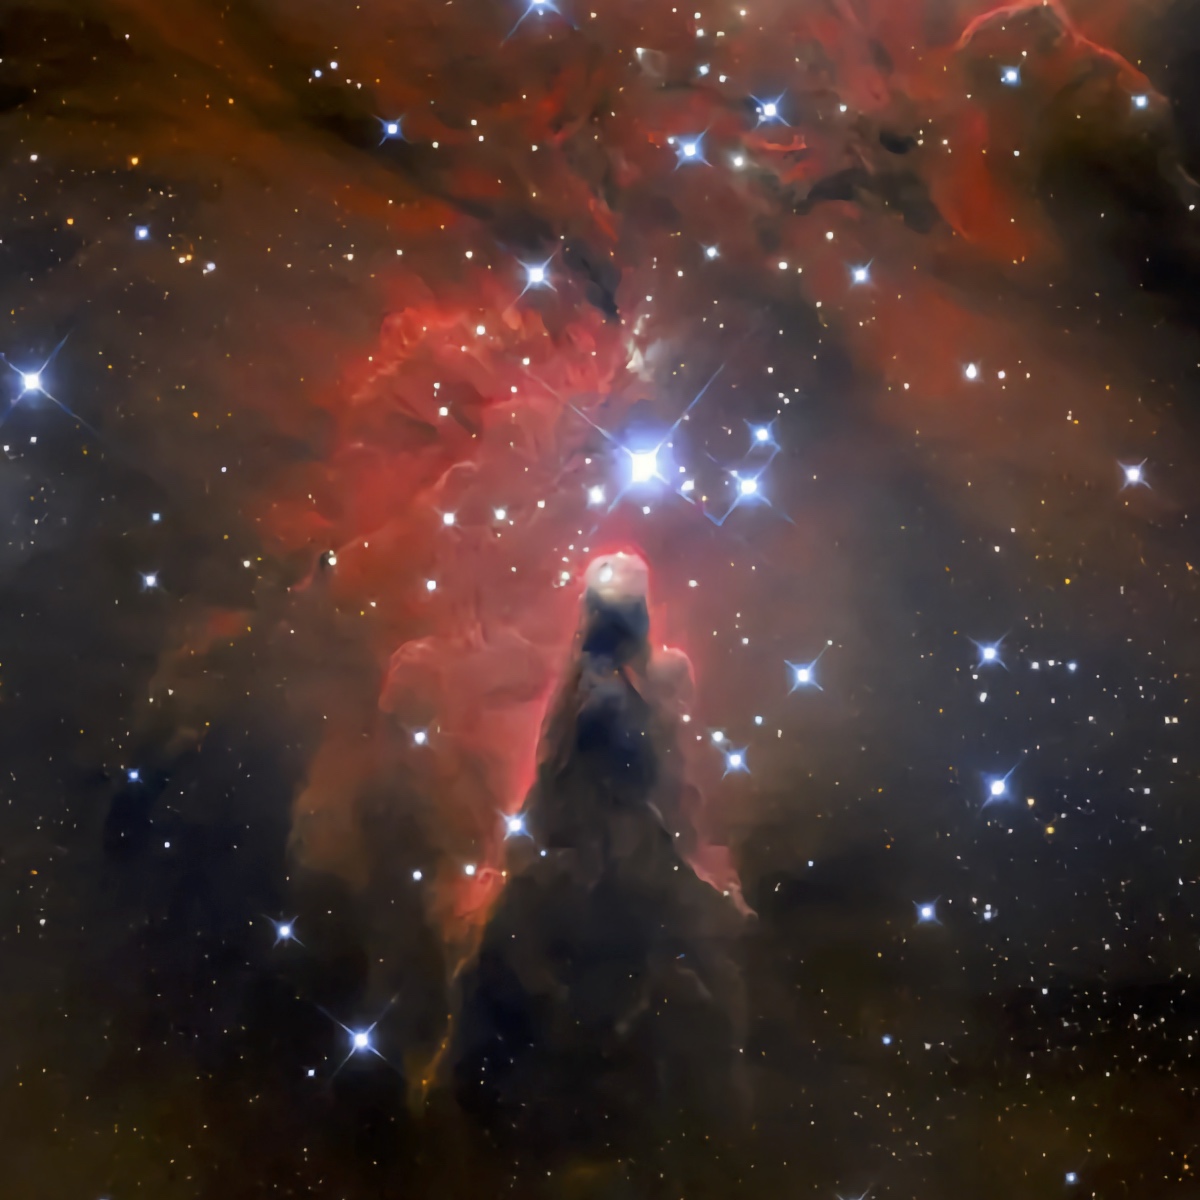 Cone Nebula. Credit: Mount Lemmon / Adam Block, University of Arizona / SkyCenter